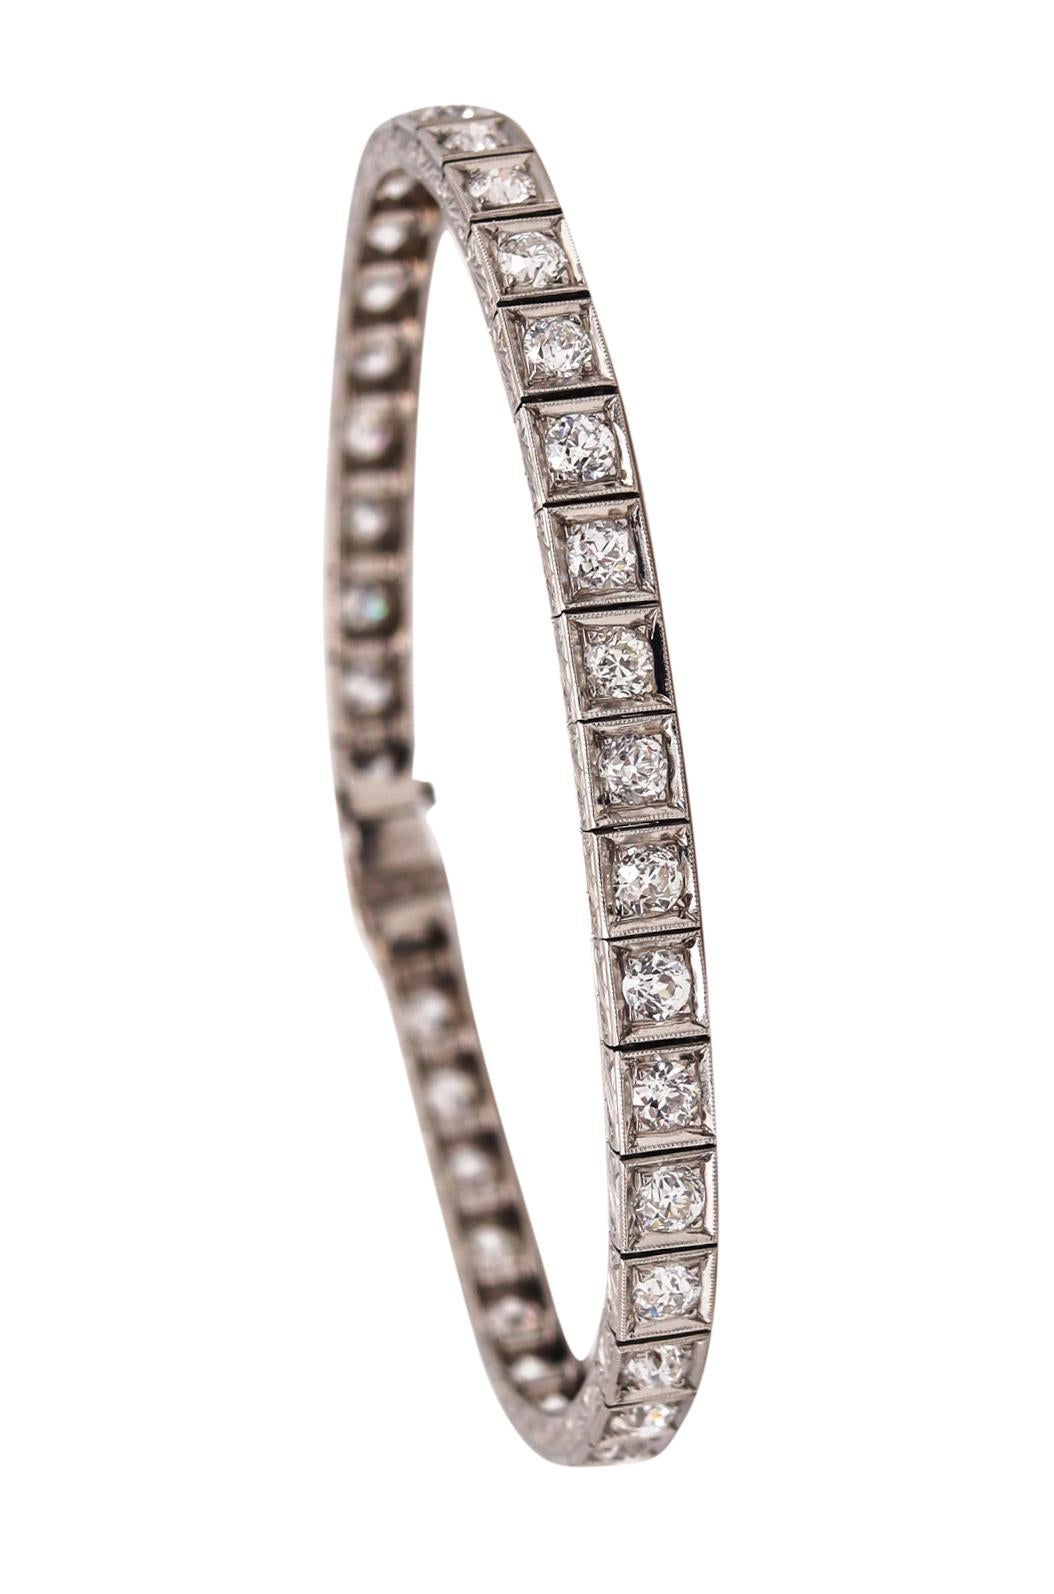 rita hayworth wearing diamond bracelet